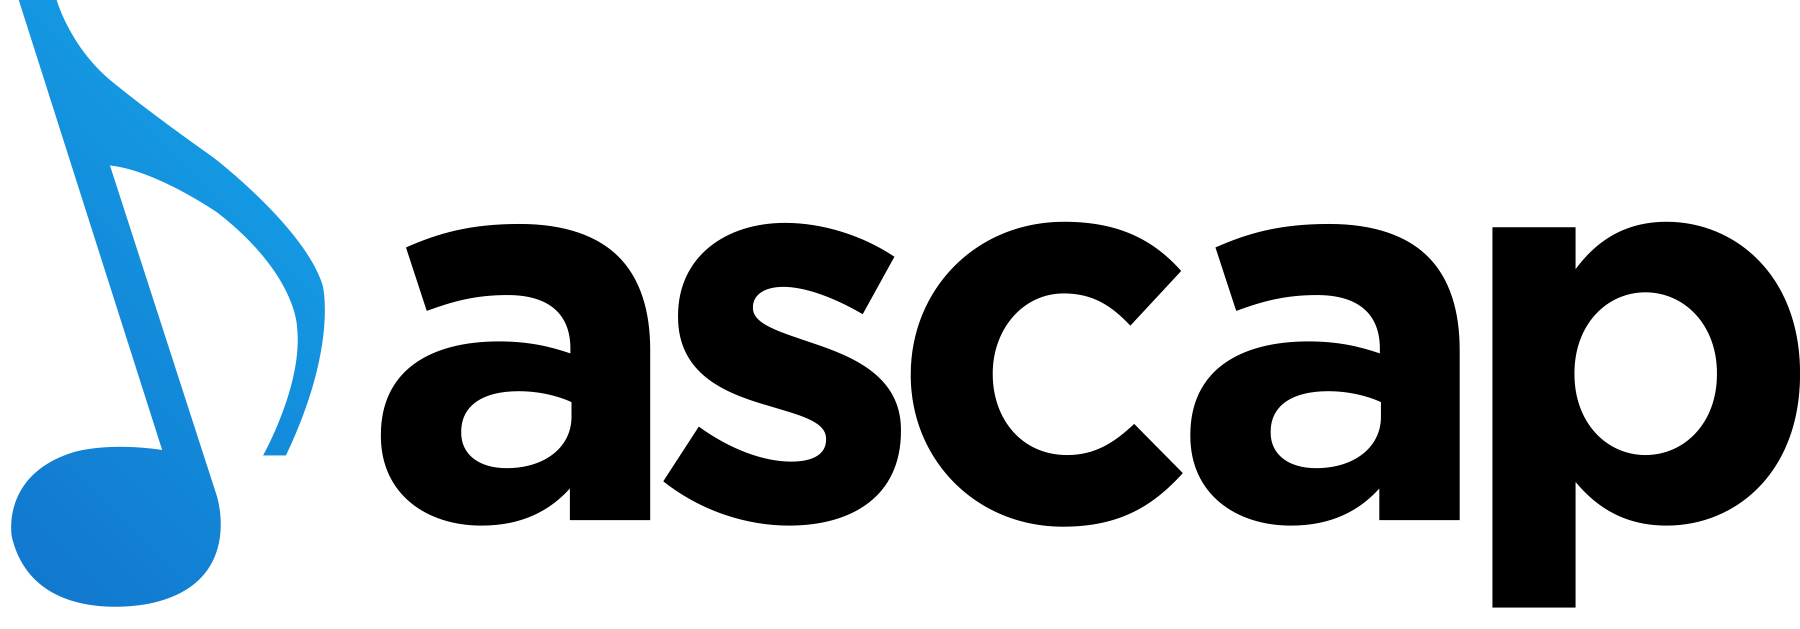 ASCAP_Logo_Horizontal_Black